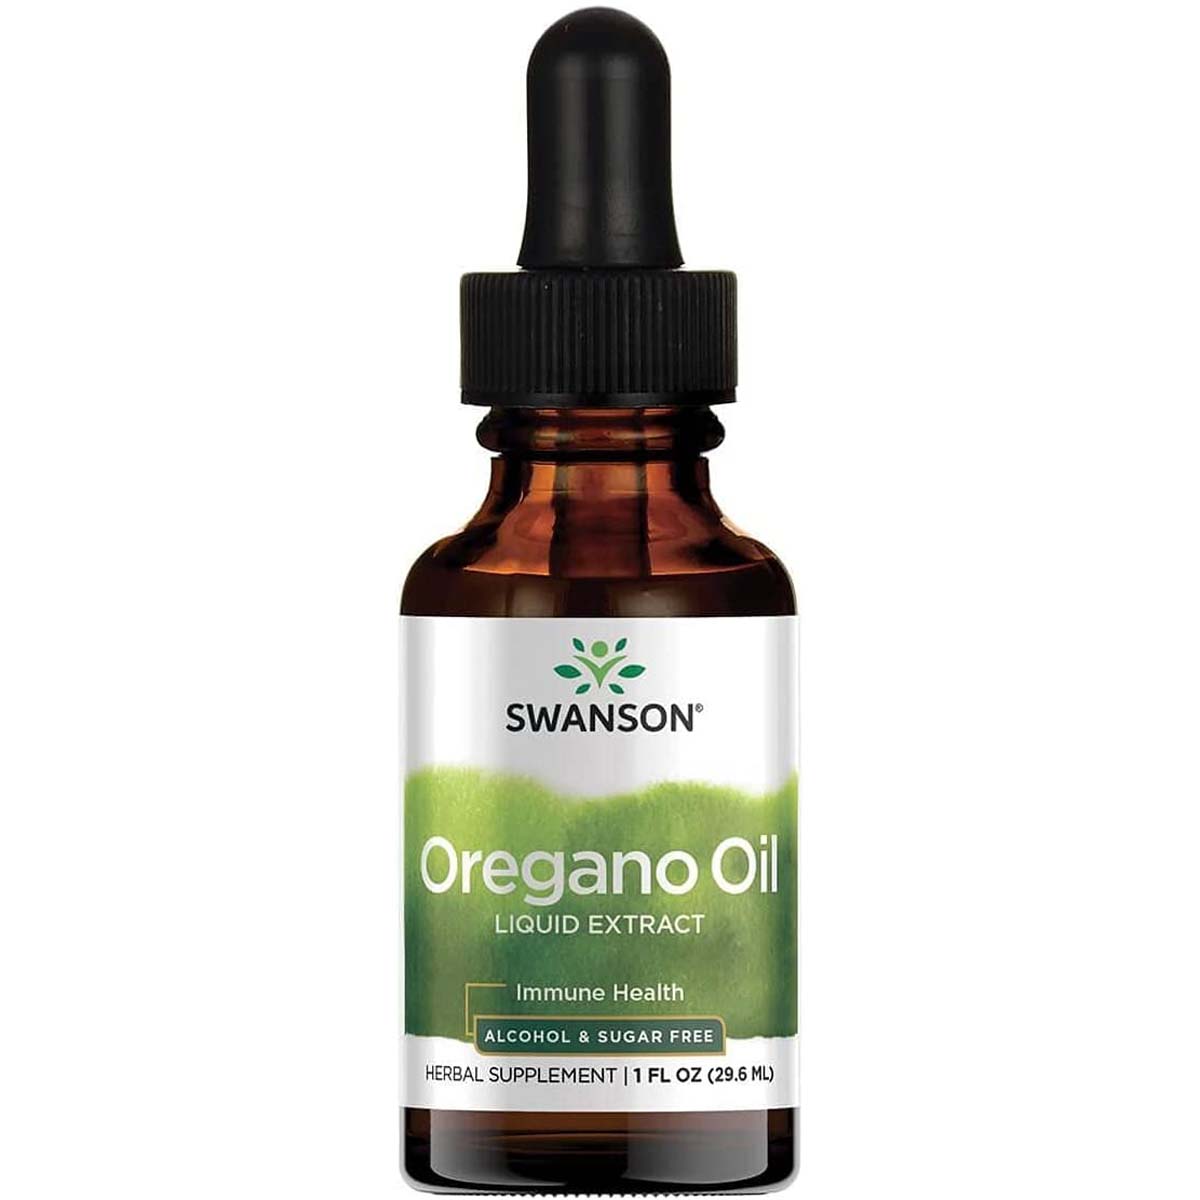 Swanson Oil of Oregano Liquid Extract, 29.6 ML